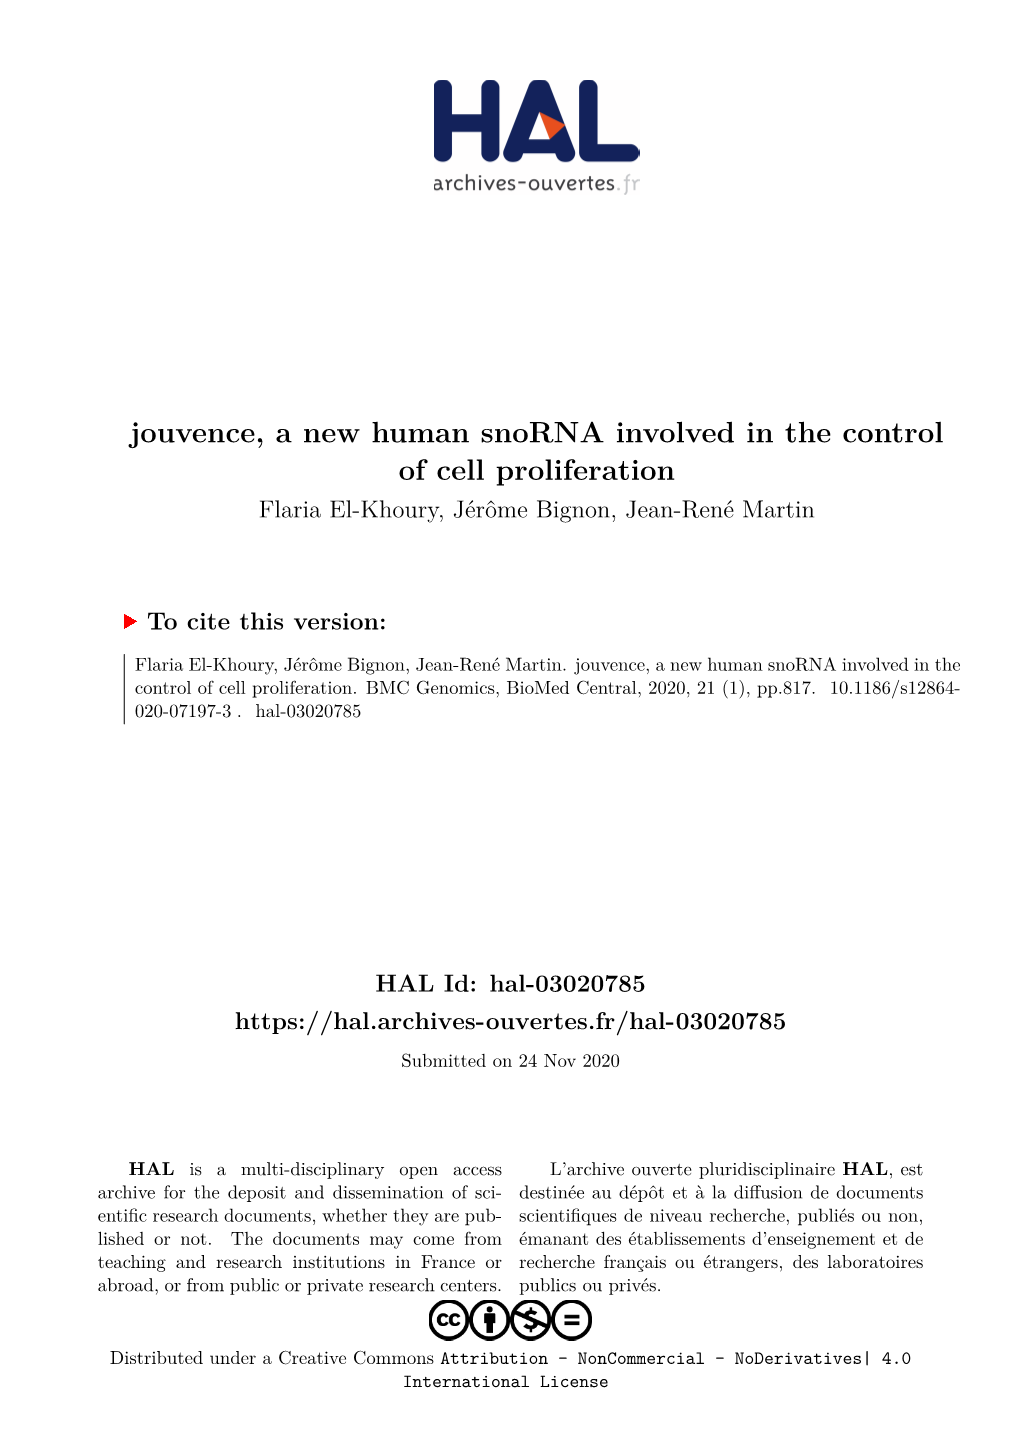 Jouvence, a New Human Snorna Involved in the Control of Cell Proliferation Flaria El-Khoury, Jérôme Bignon, Jean-René Martin